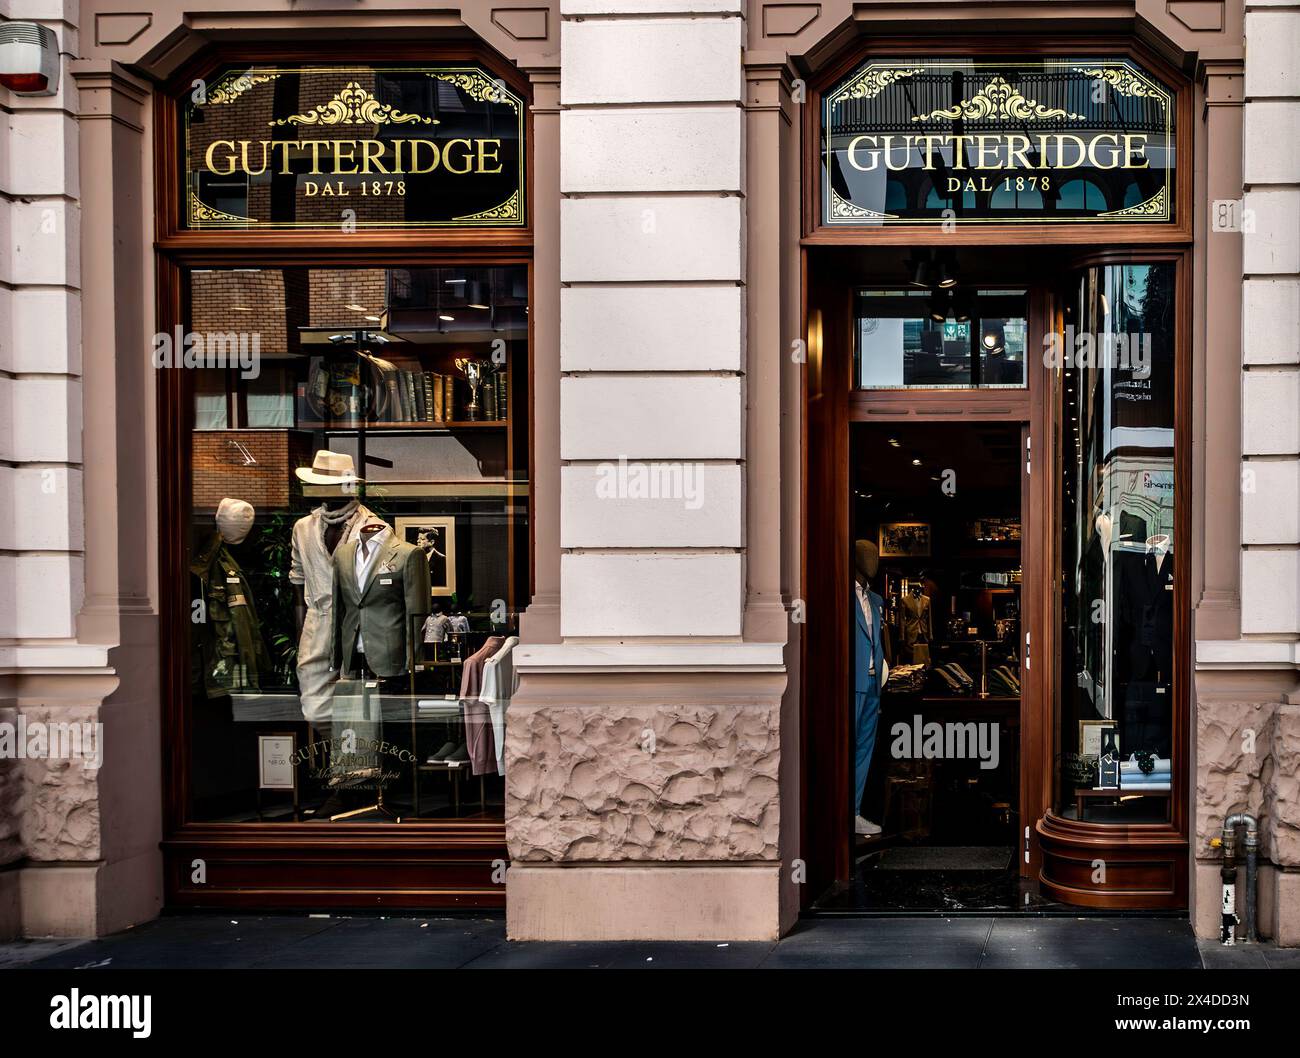 Gutteridge Gents Bespoke Tailor Shop, Bari, Italie Banque D'Images